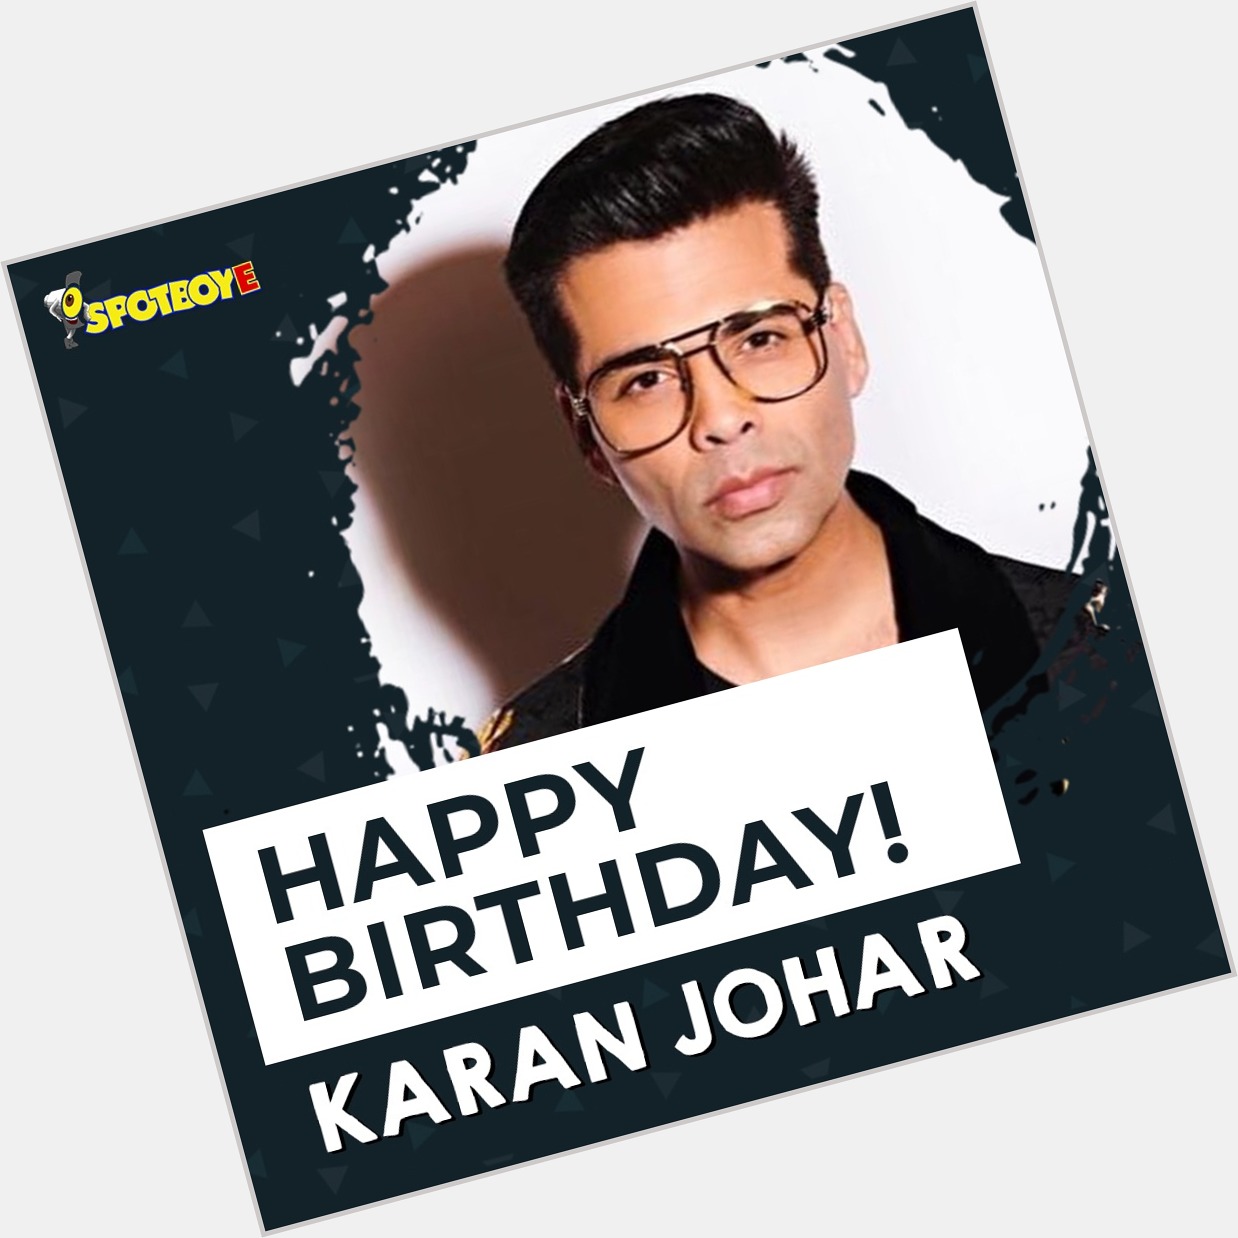 Wishing a very Happy Birthday to Karan Johar.   